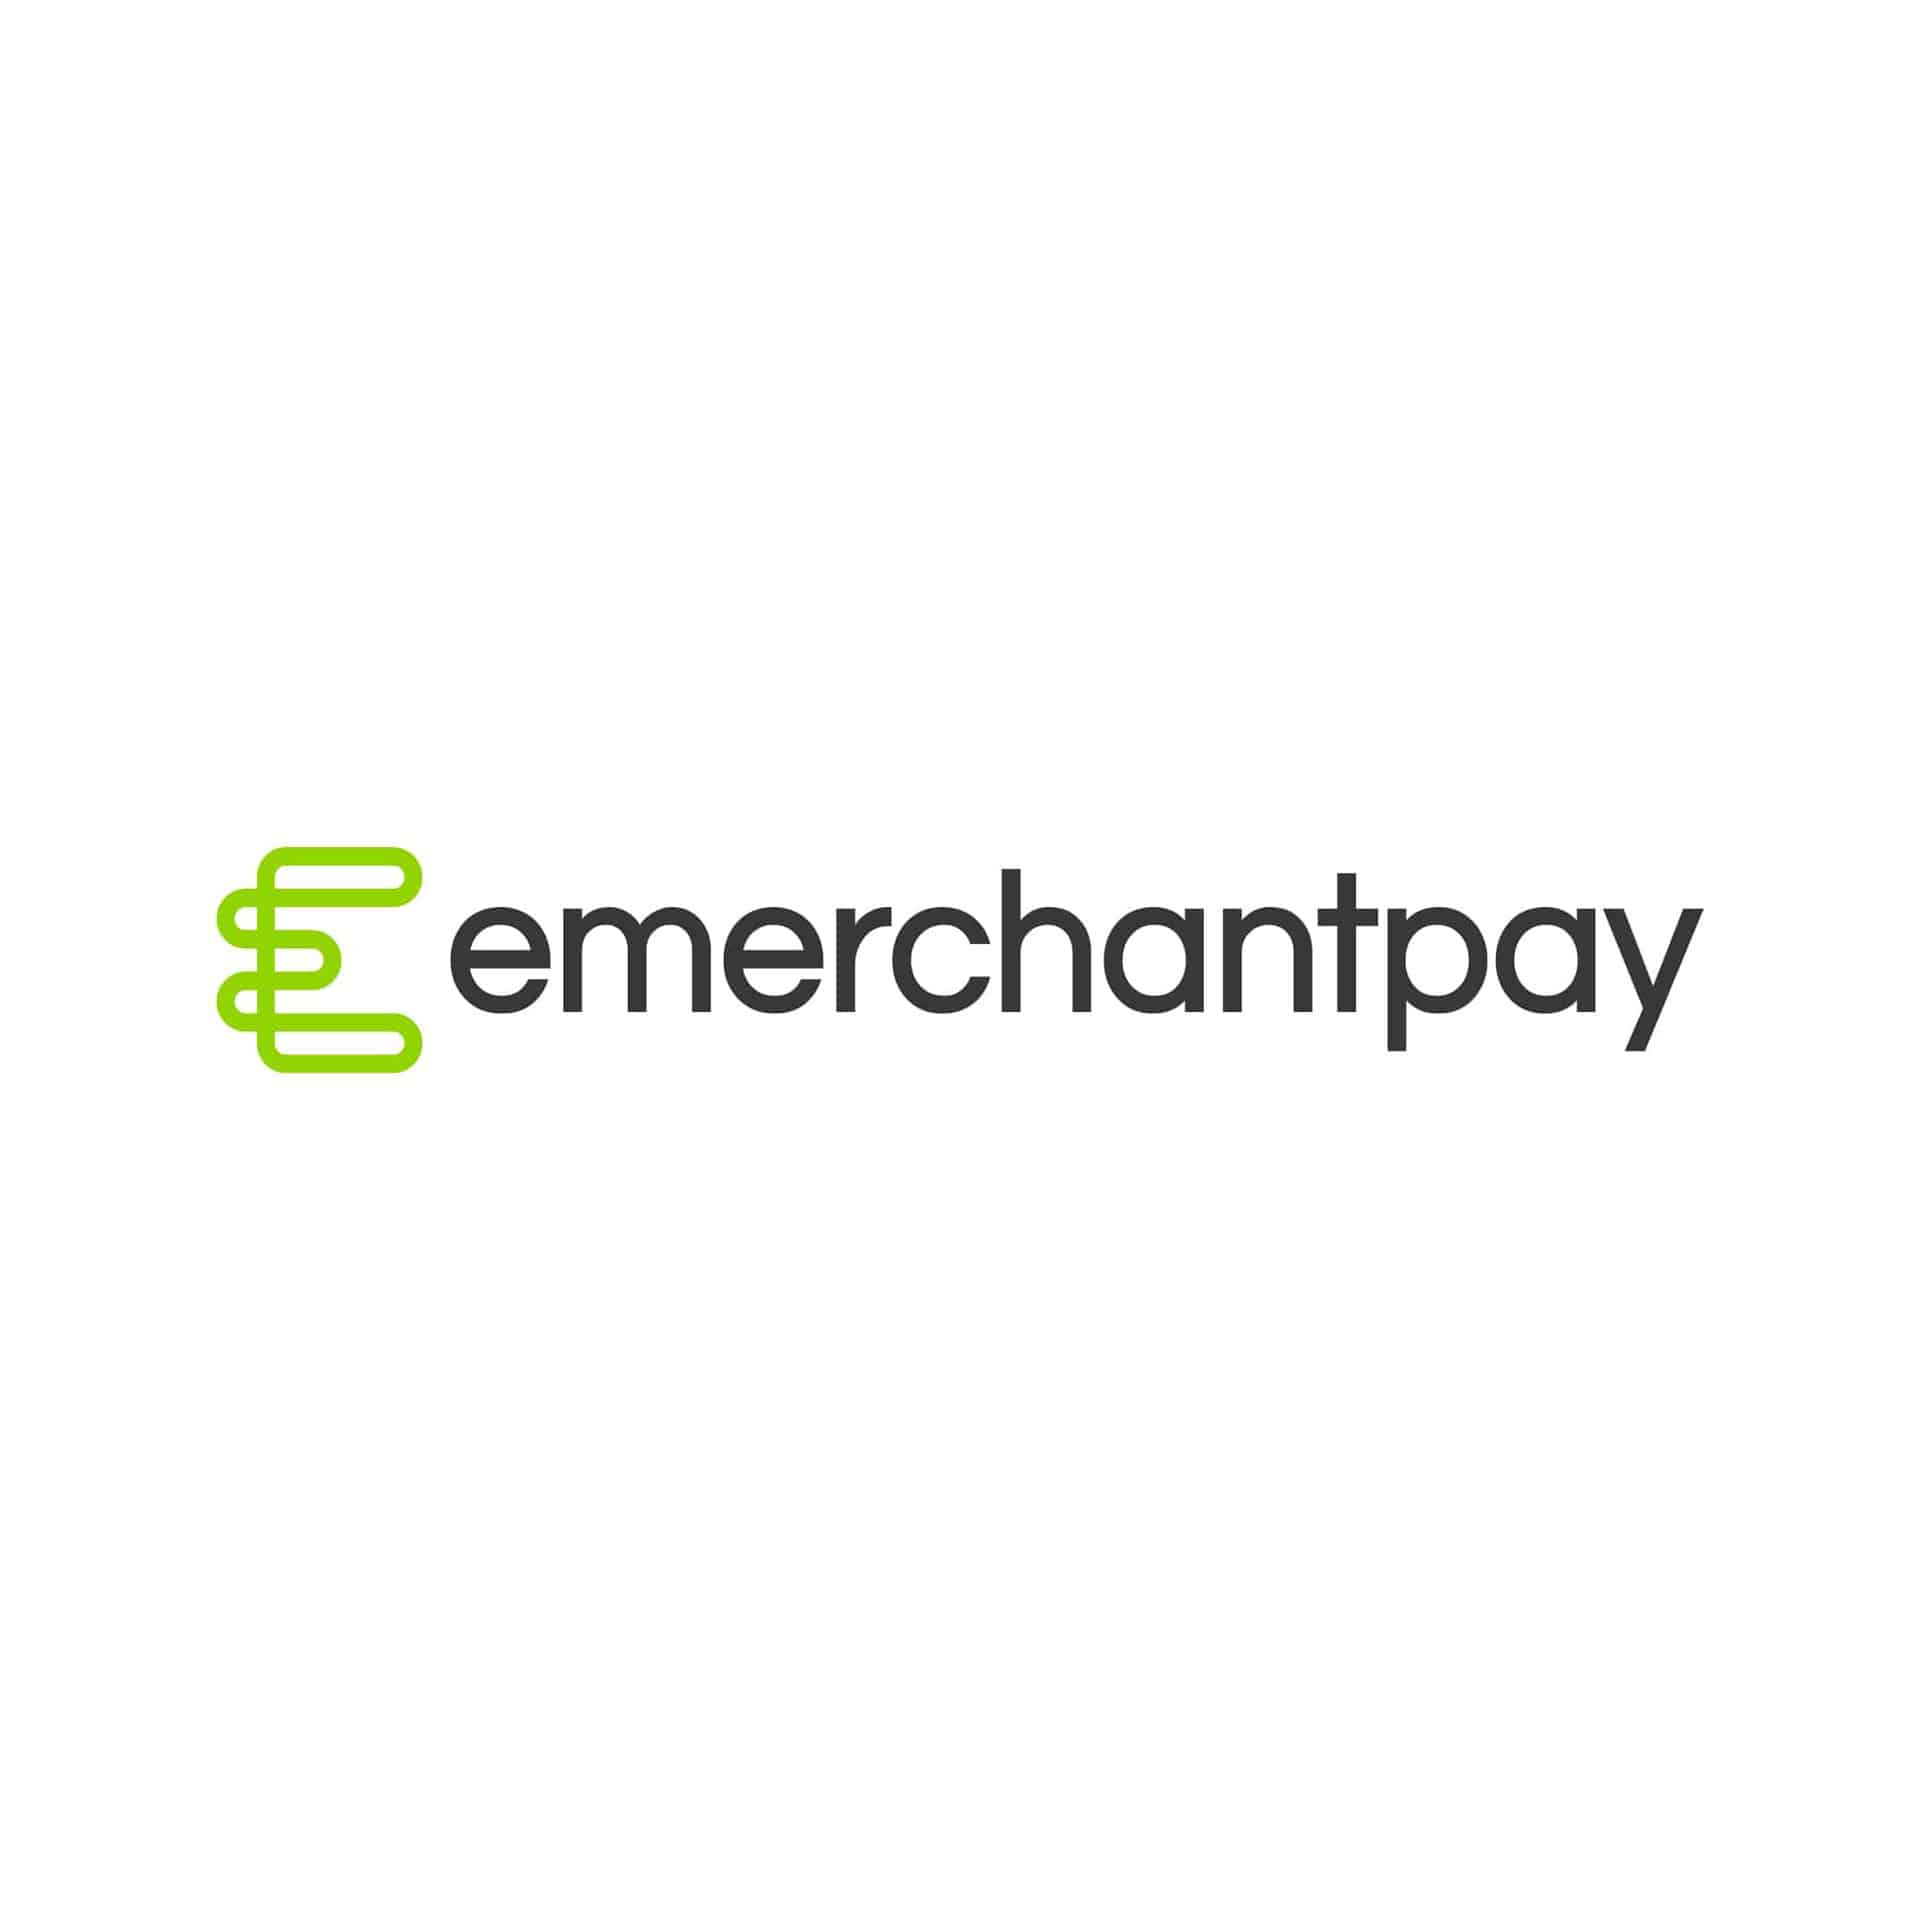 emerchantpay brand identity